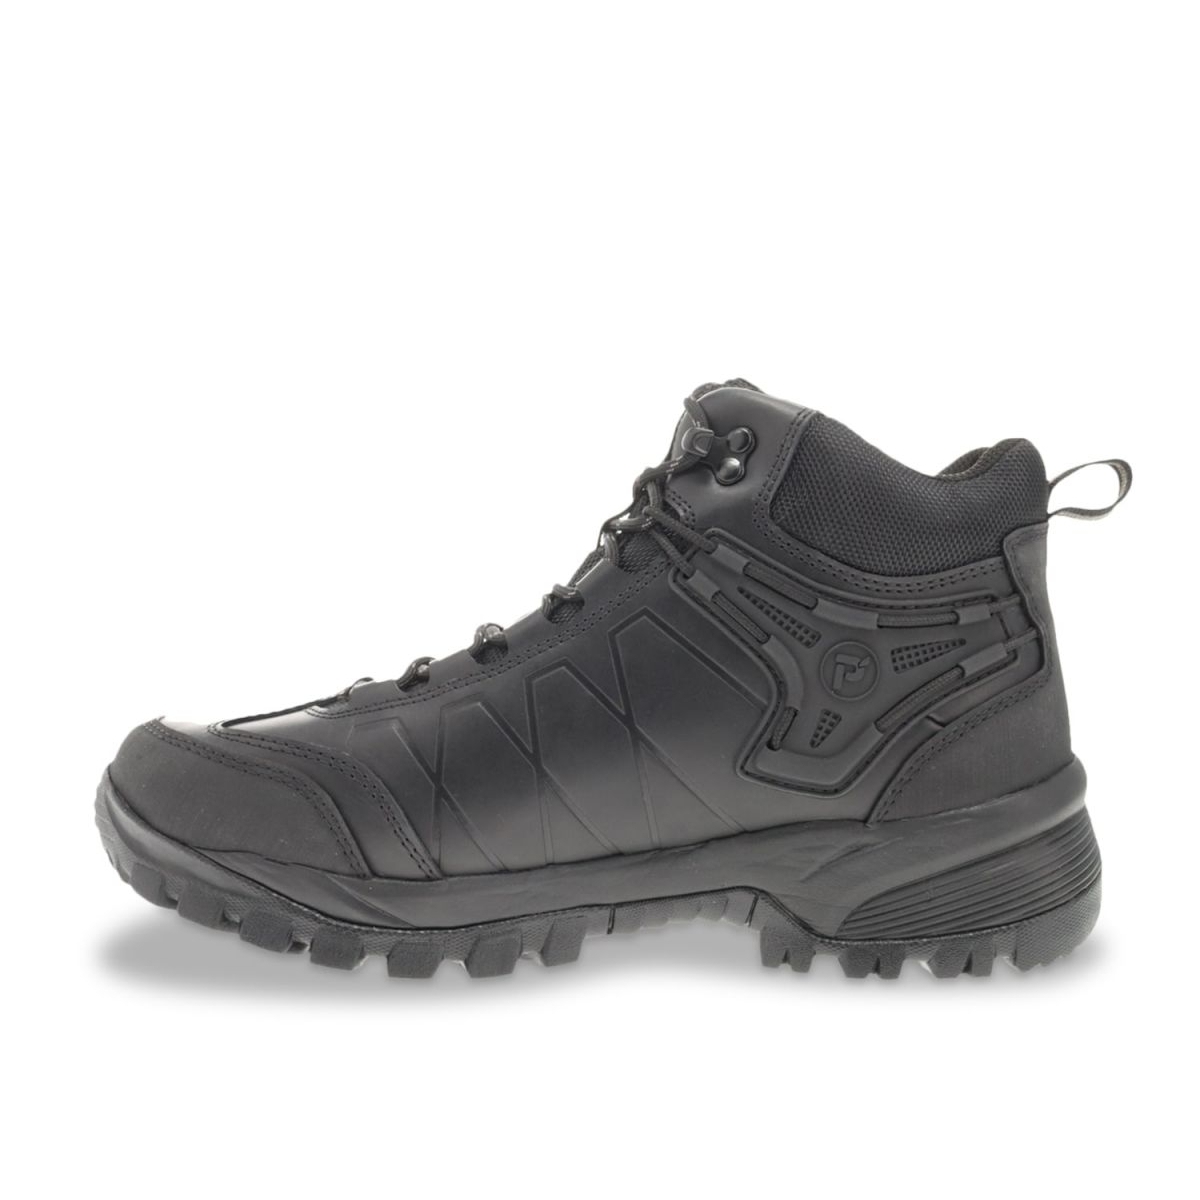 Propet Men's Ridge Walker Force Hiking Boots Black - MBA052LBLK BLACK - BLACK, 13 WIDE